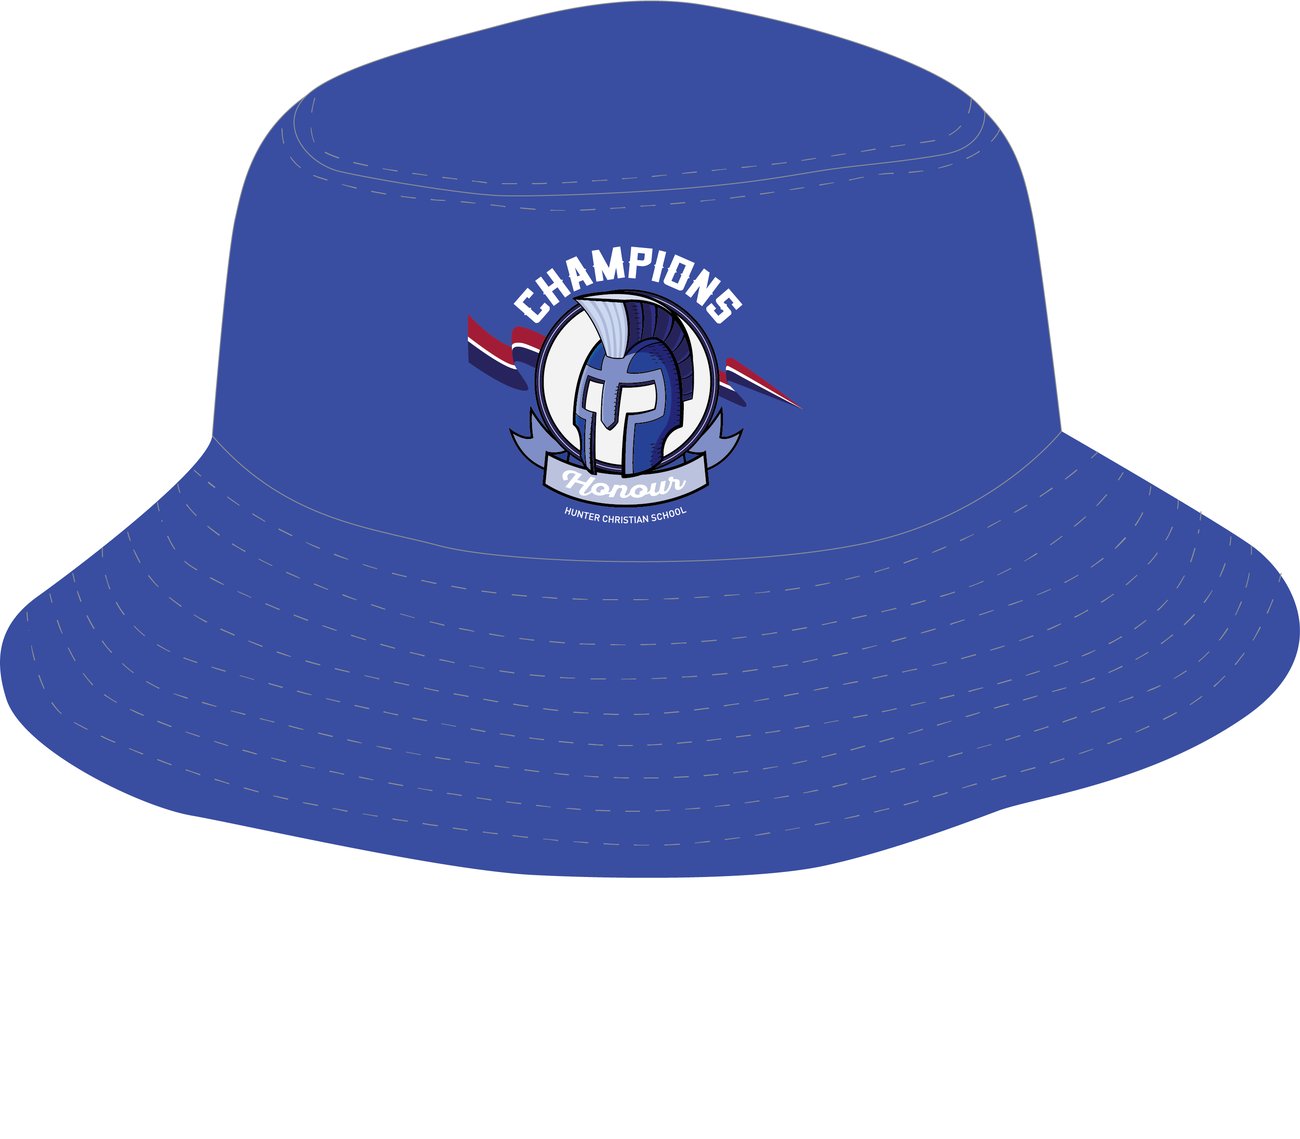 Champions (Blue) Broad Brimmed Hat | Hunter Christian School Uniform Shop